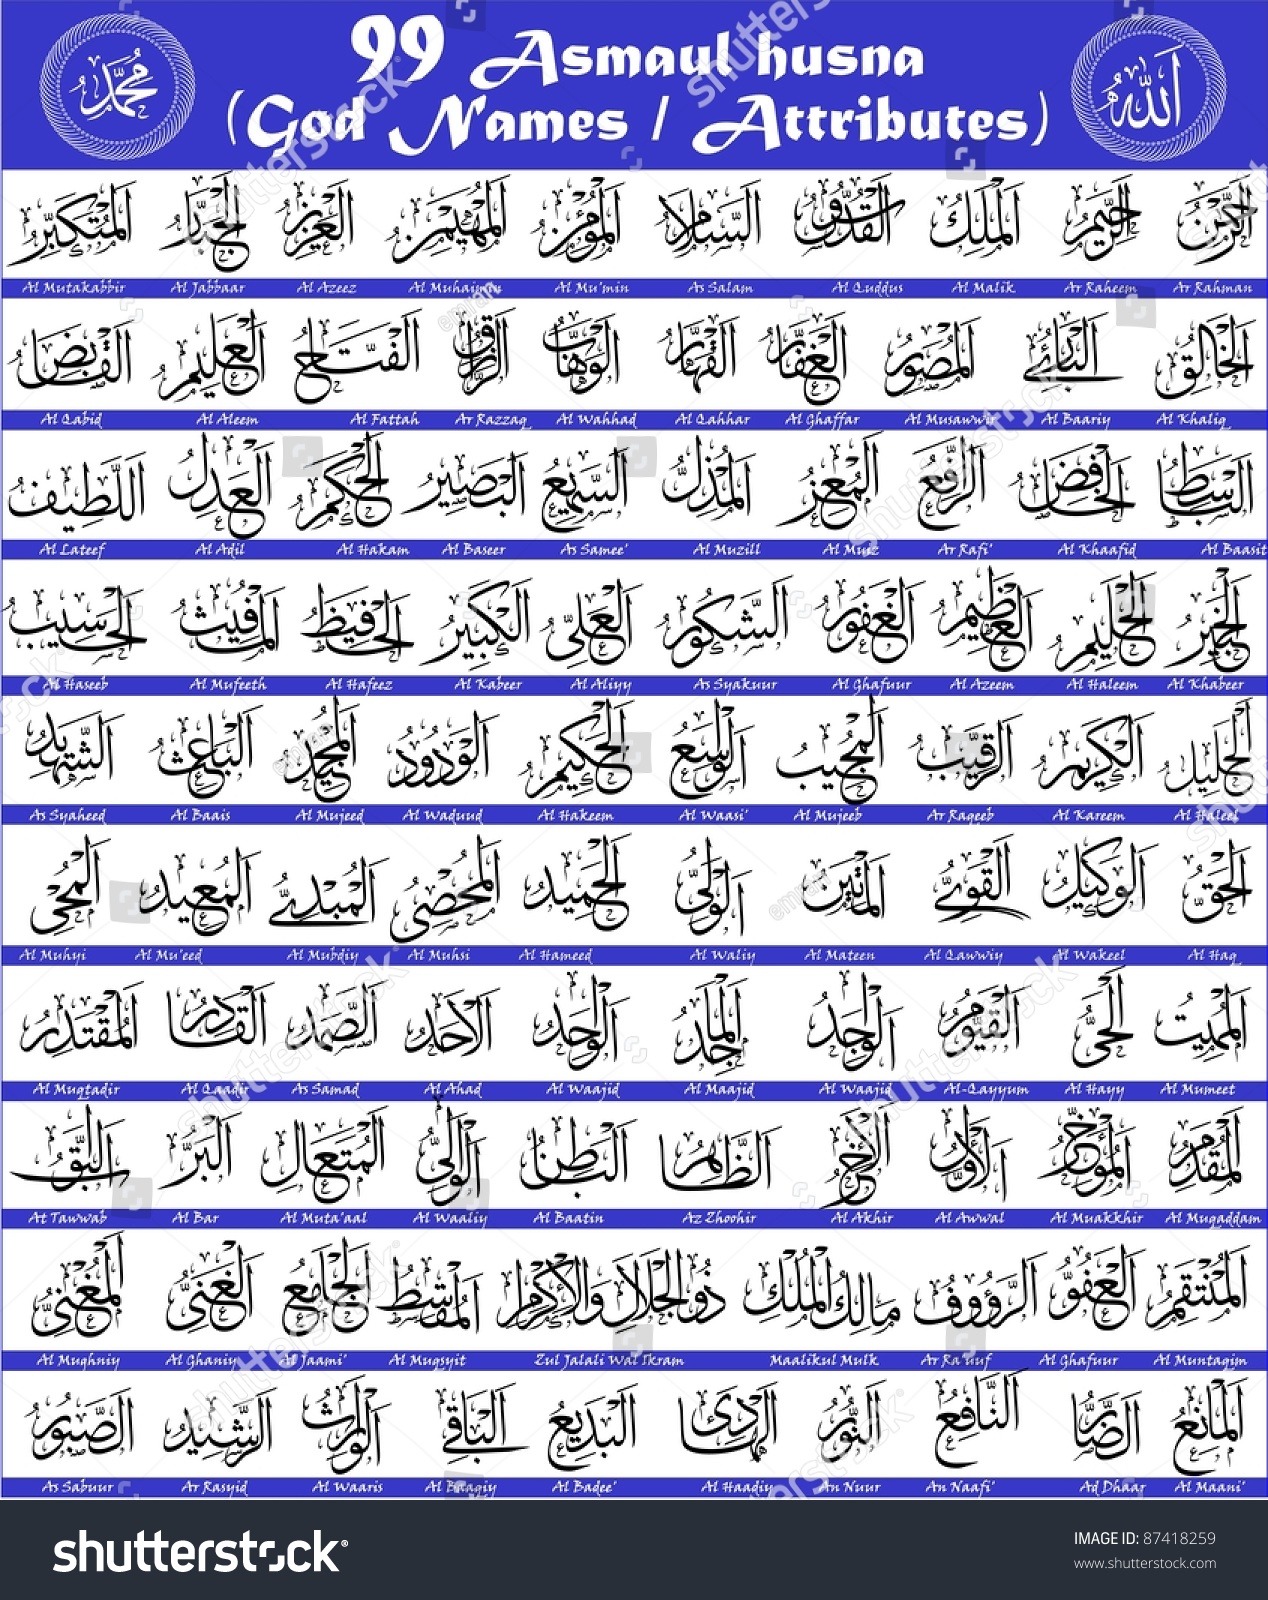 99 Attributes Names Allah Asmaul Husna  Stock Vector 